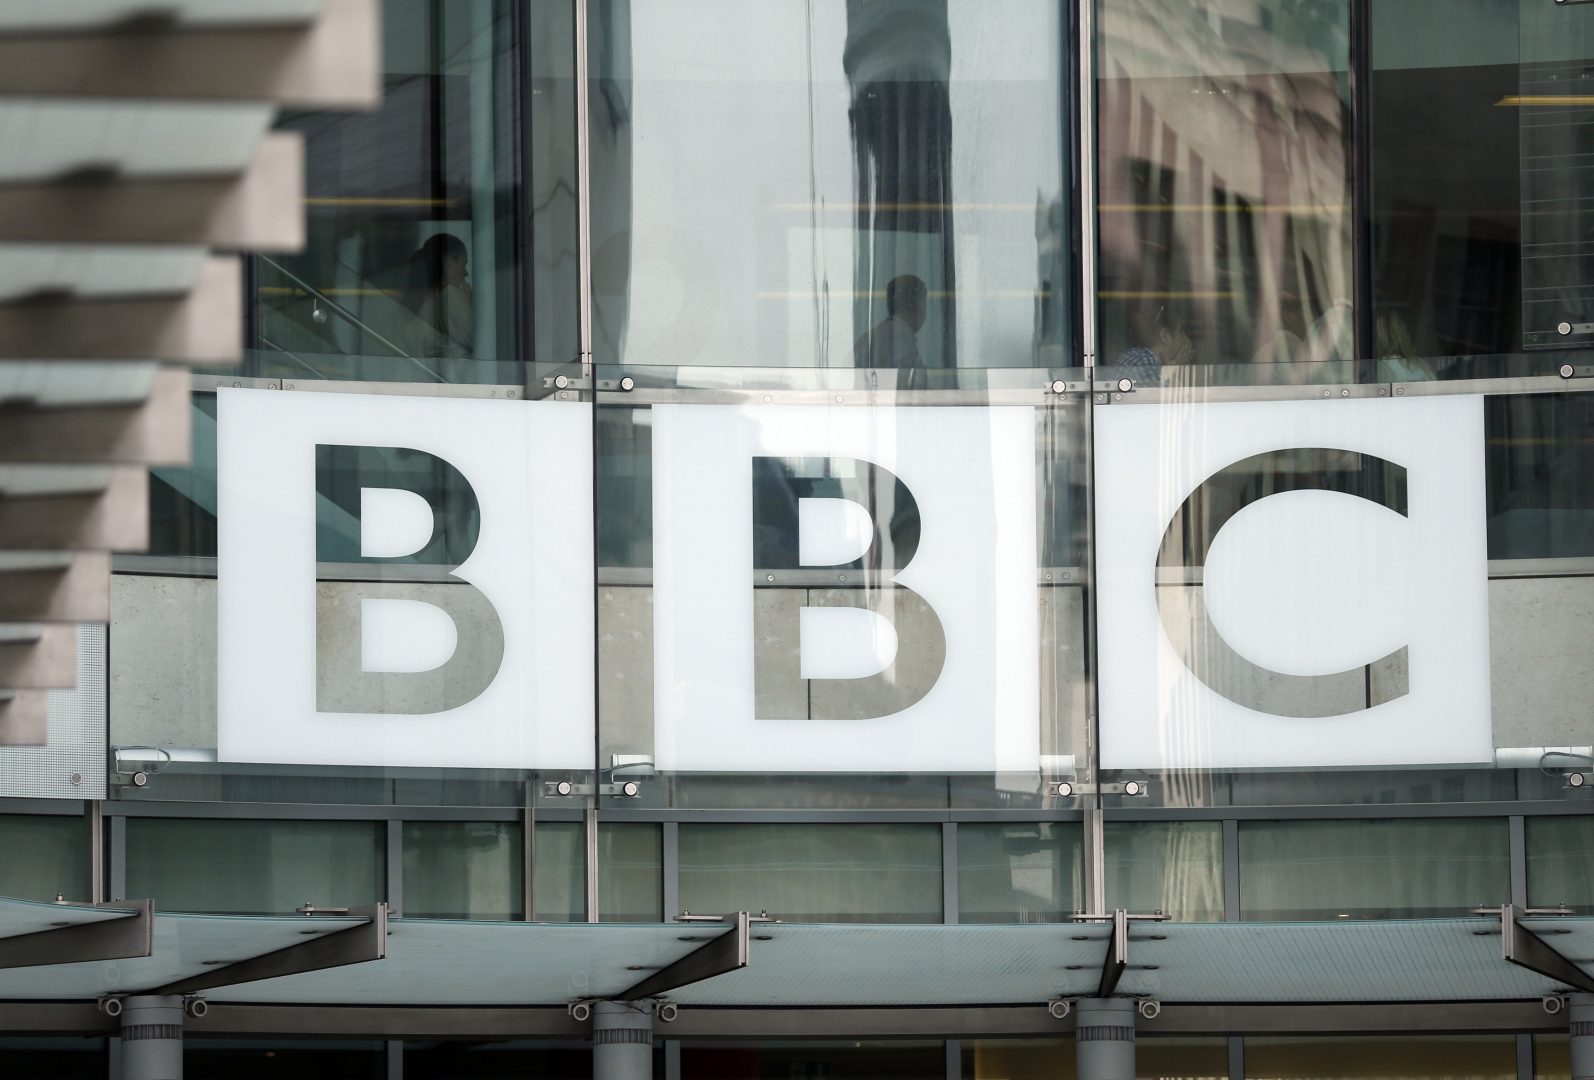 BBC logo. 